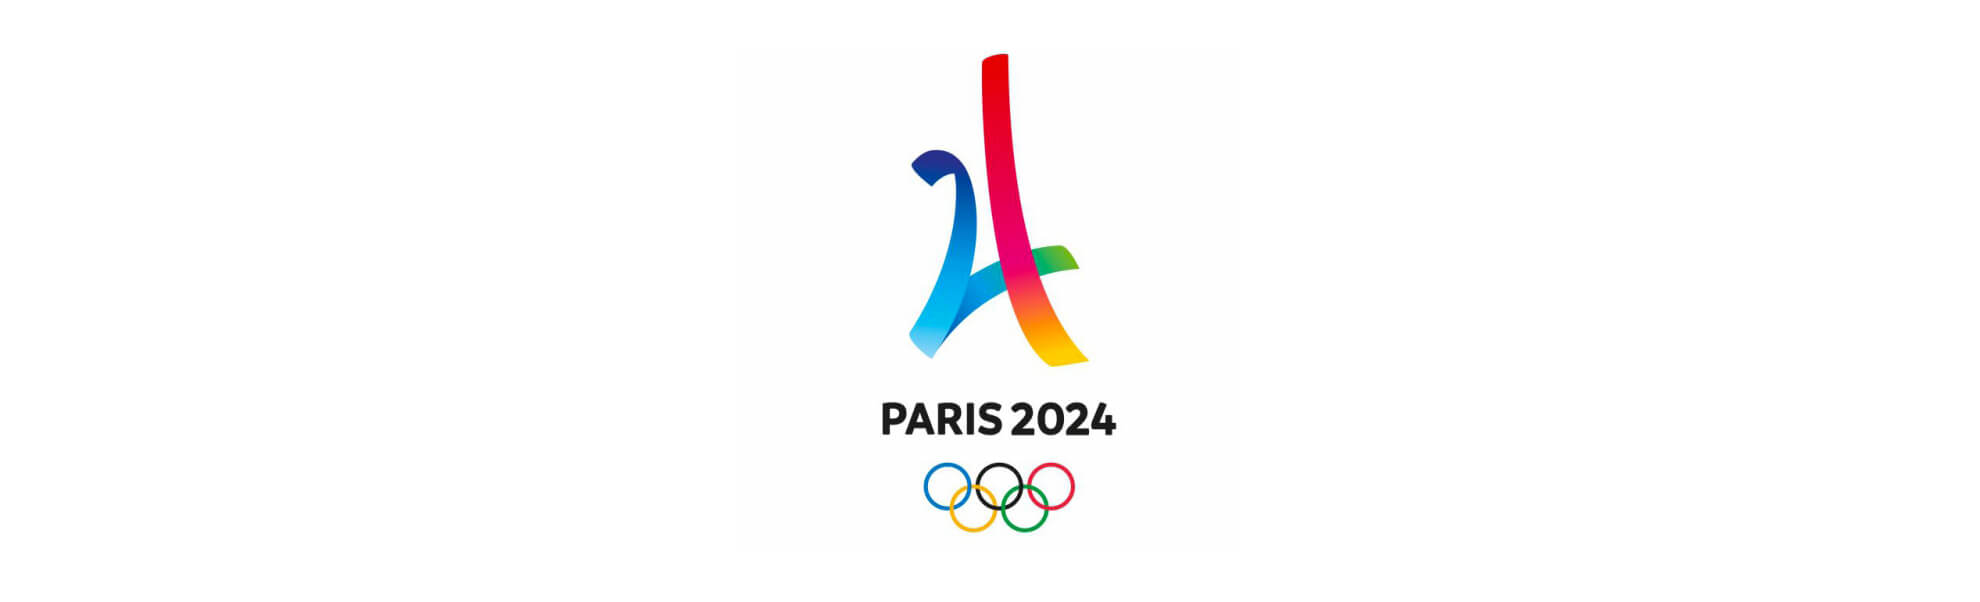 logo kandydackie Paris 2024 